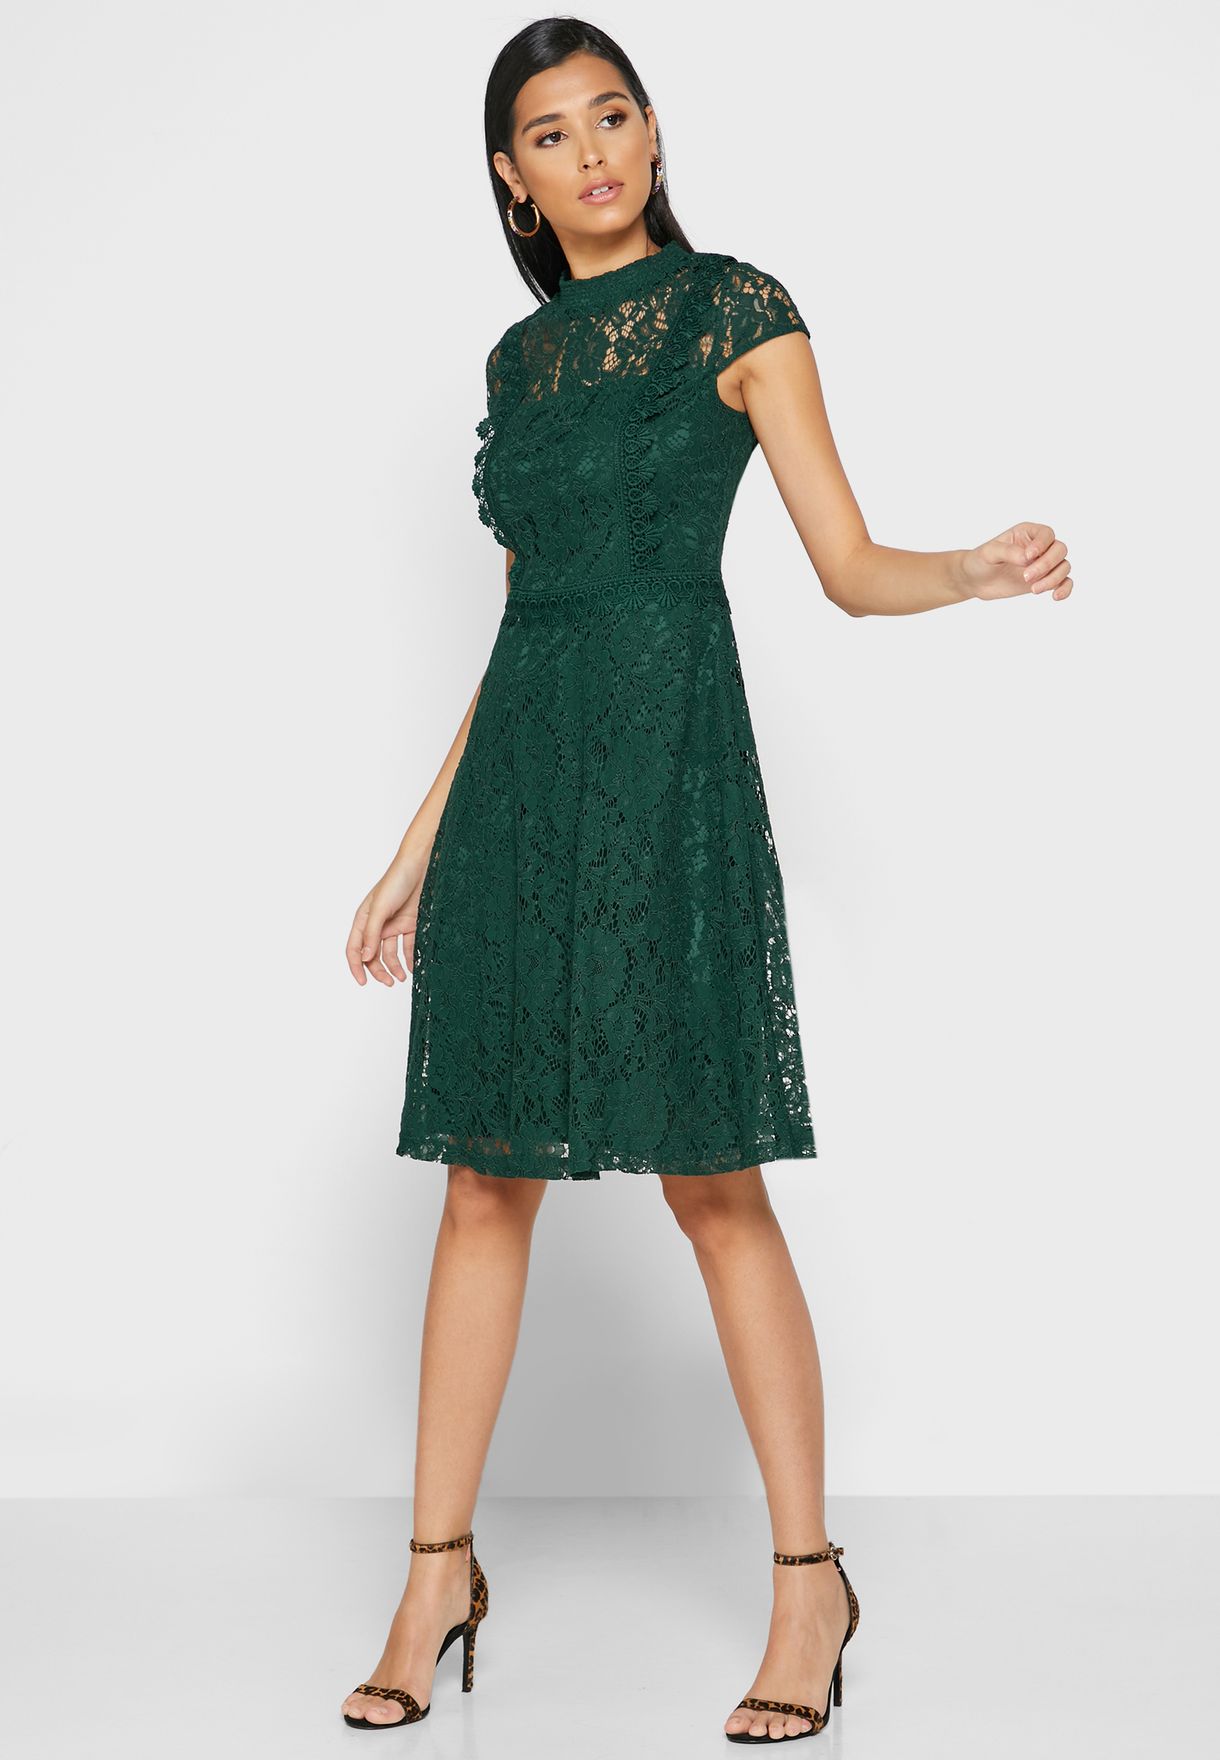 cath kidston green lace dress